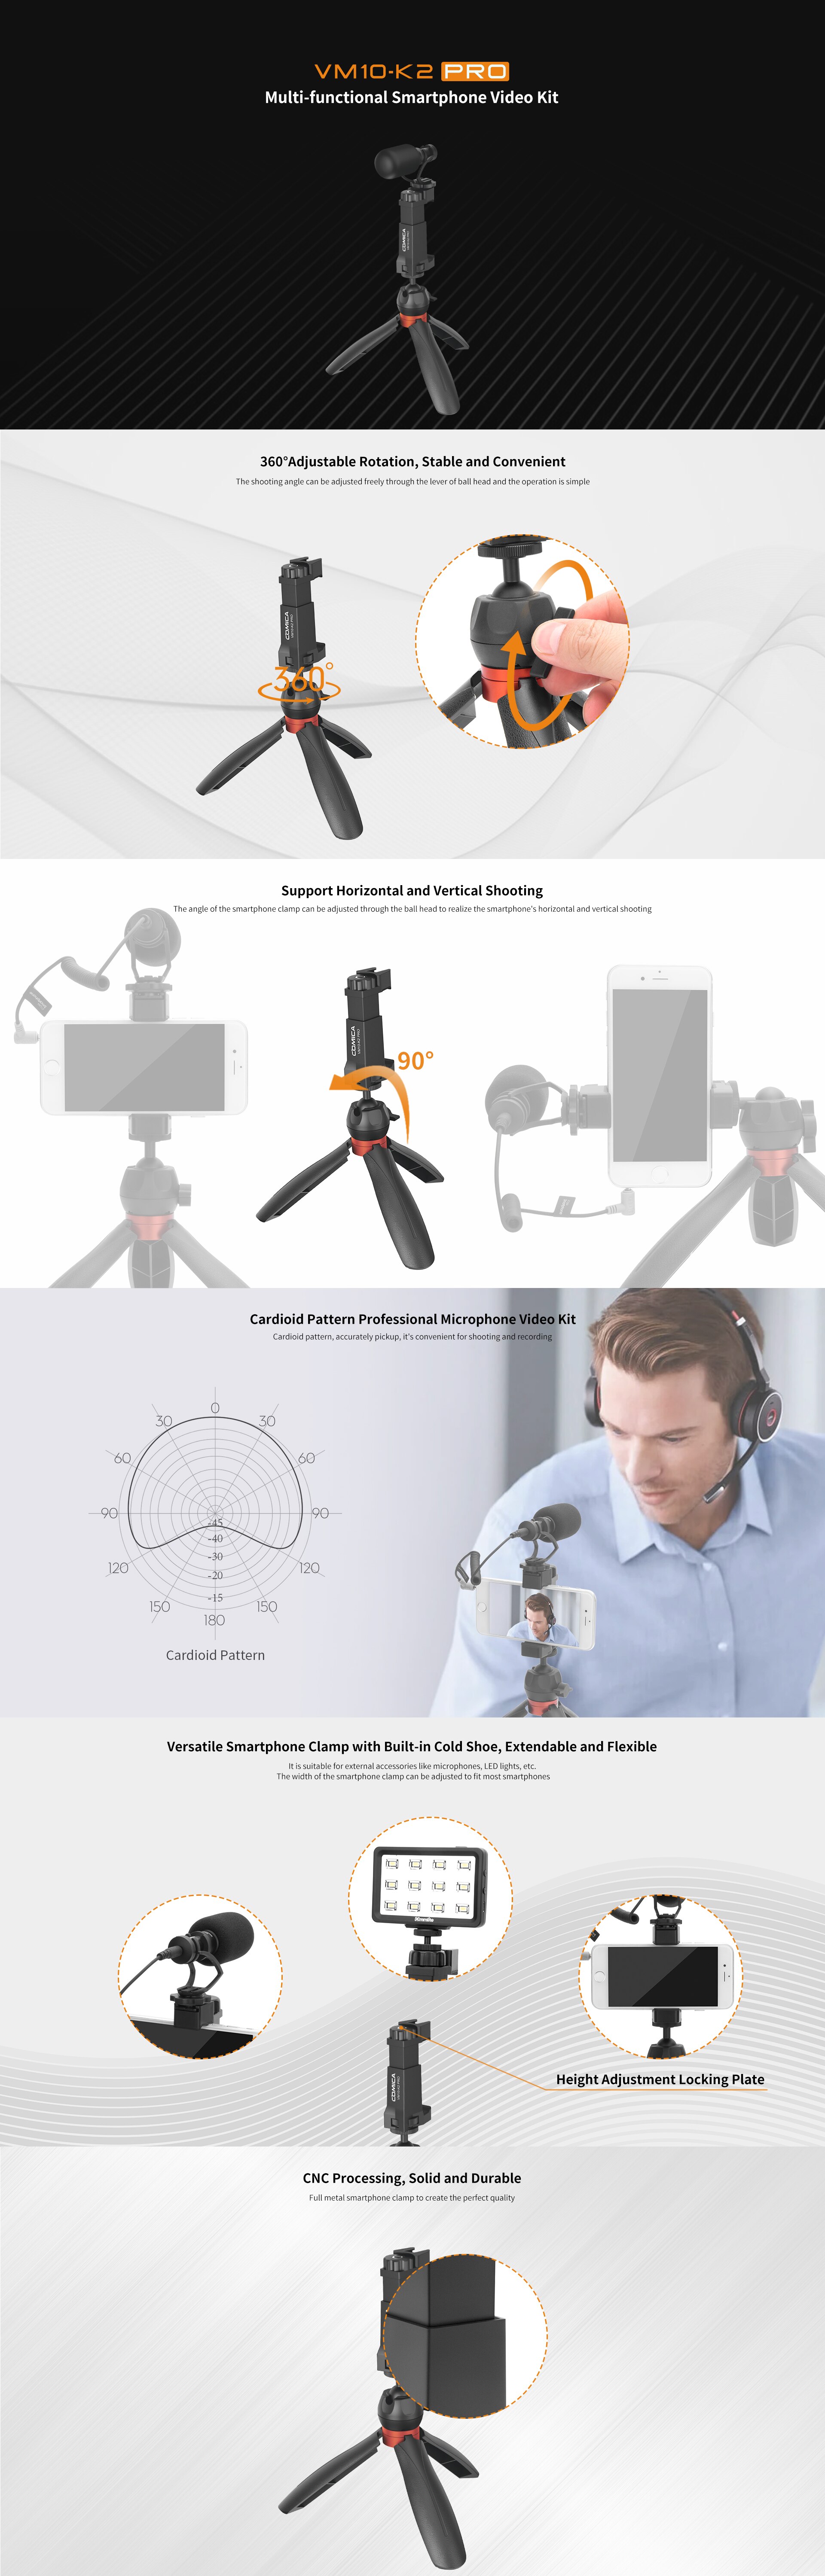 Smartphone Video Kit,Comica CVM-VM10-K2 Pro Recording Mi